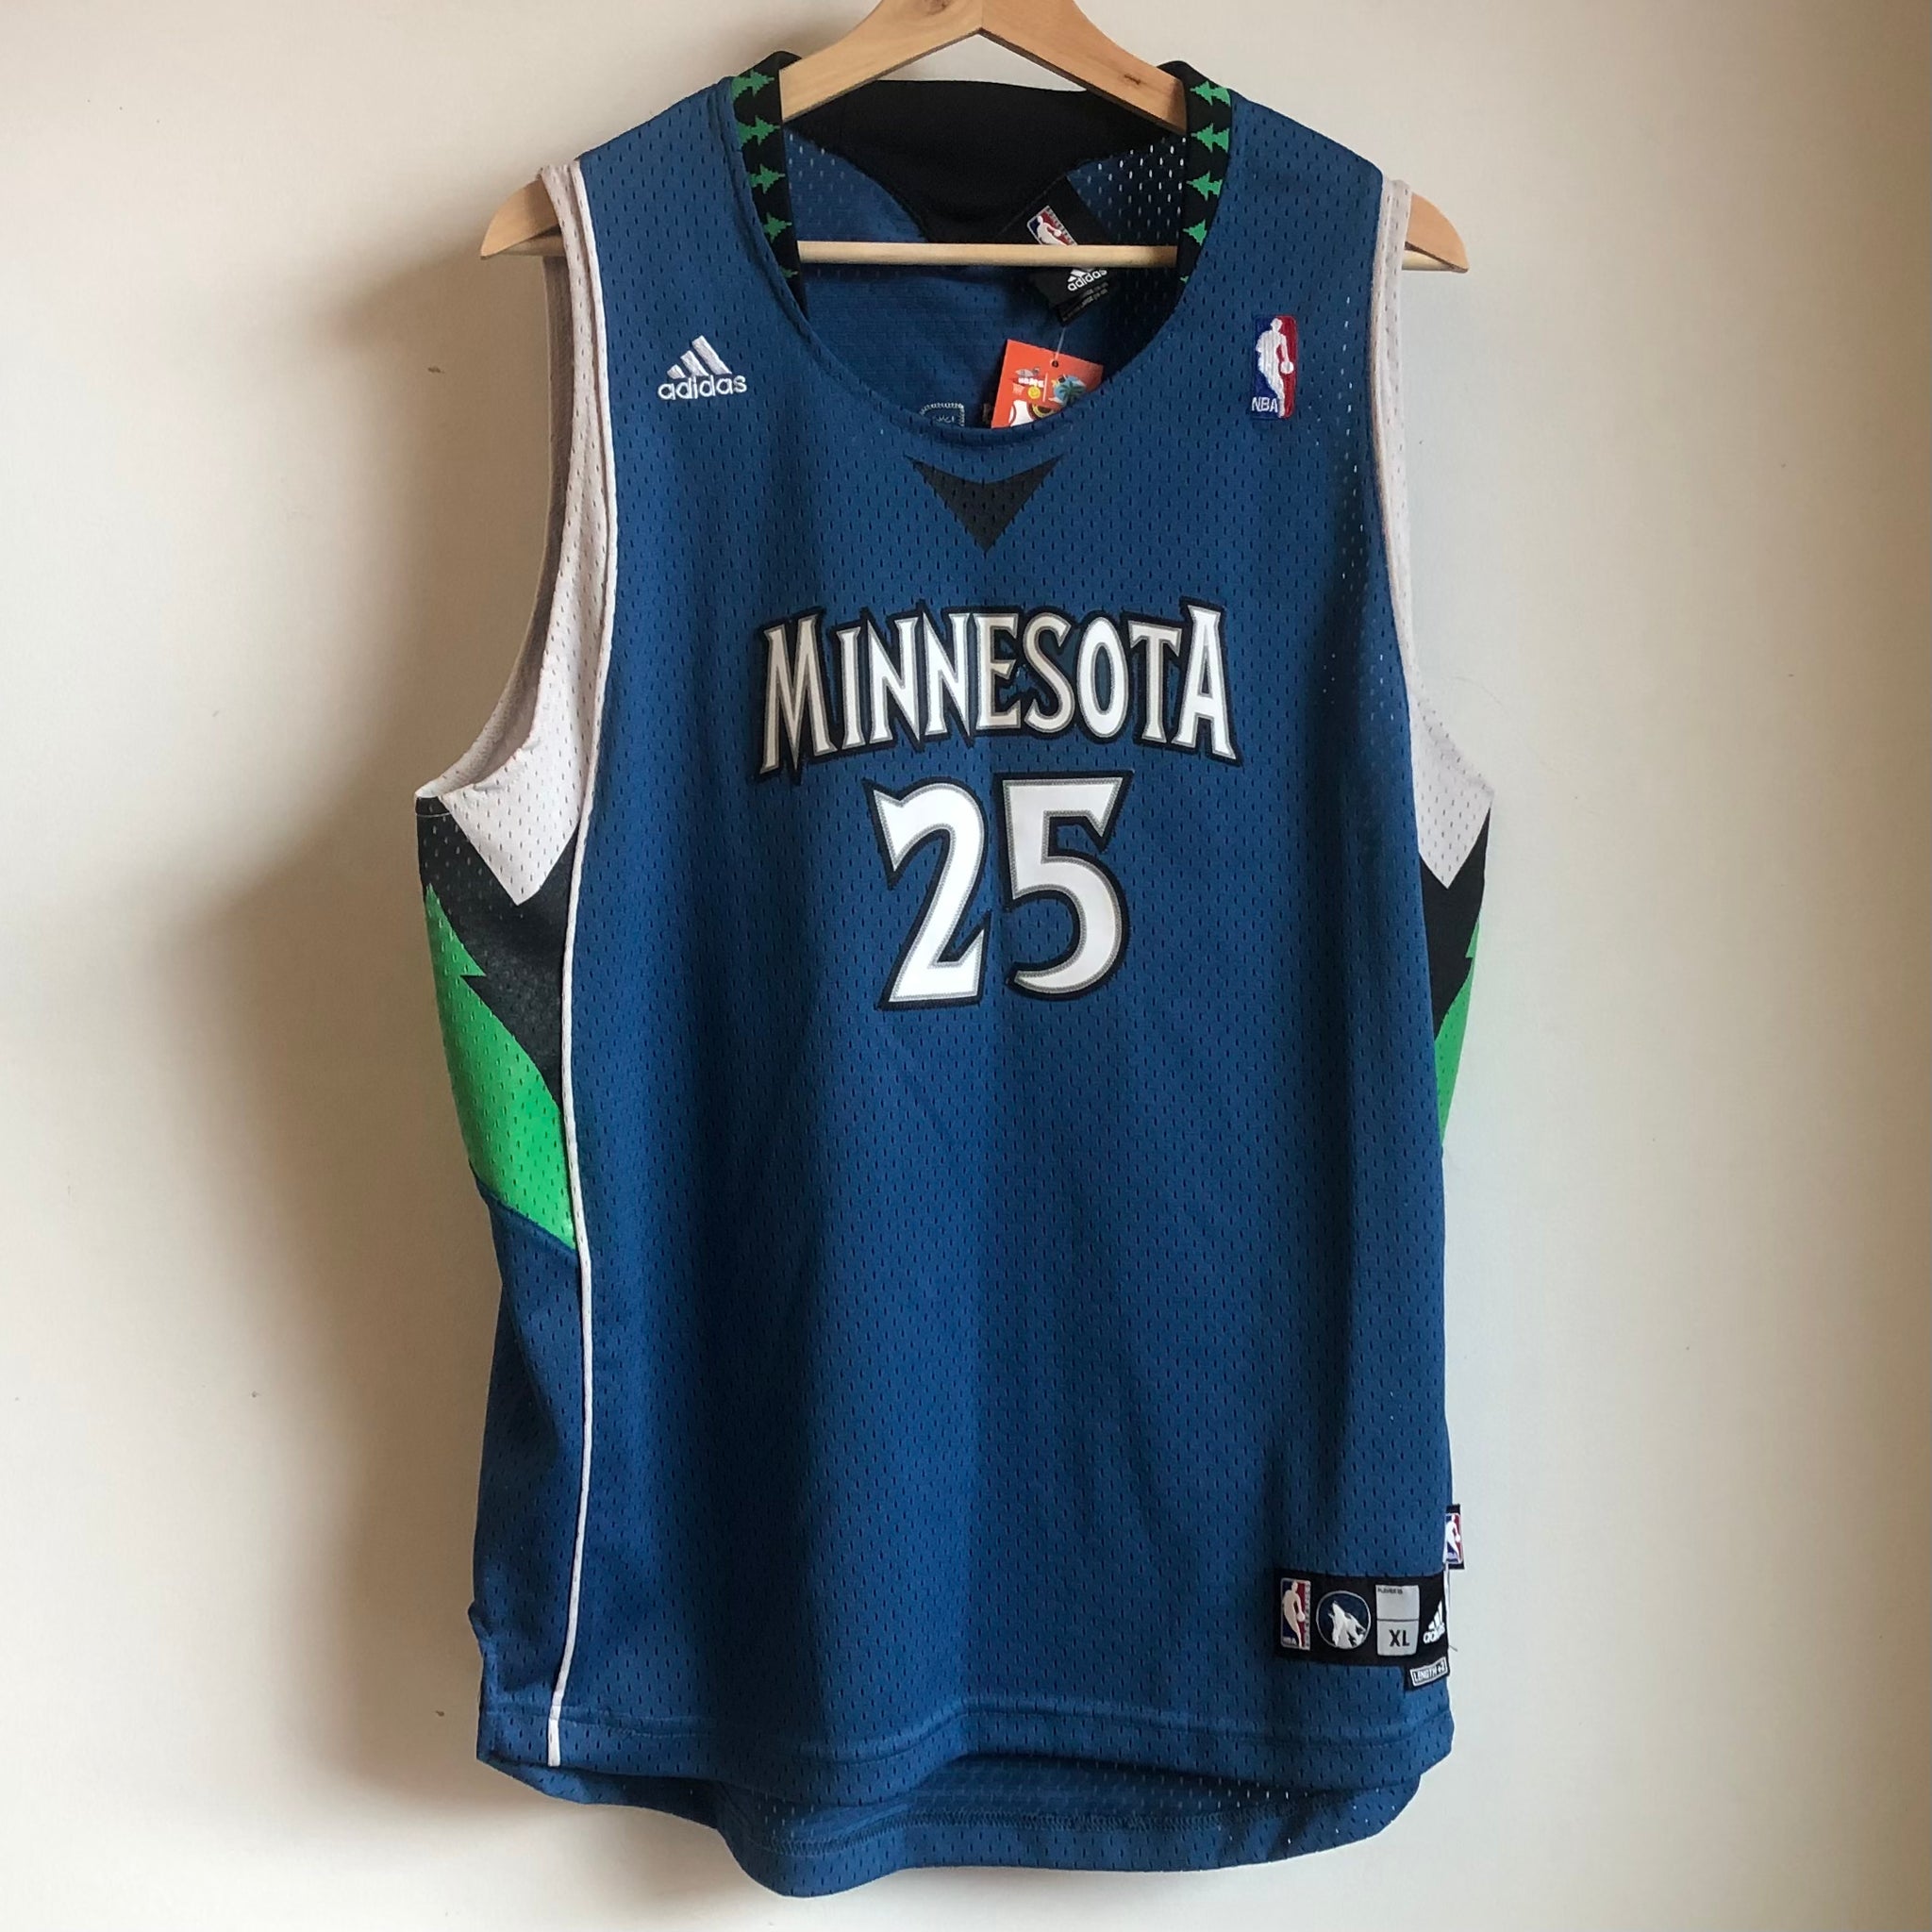 Minnesota Timberwolves  Minnesota timberwolves, Minnesota, Nba uniforms